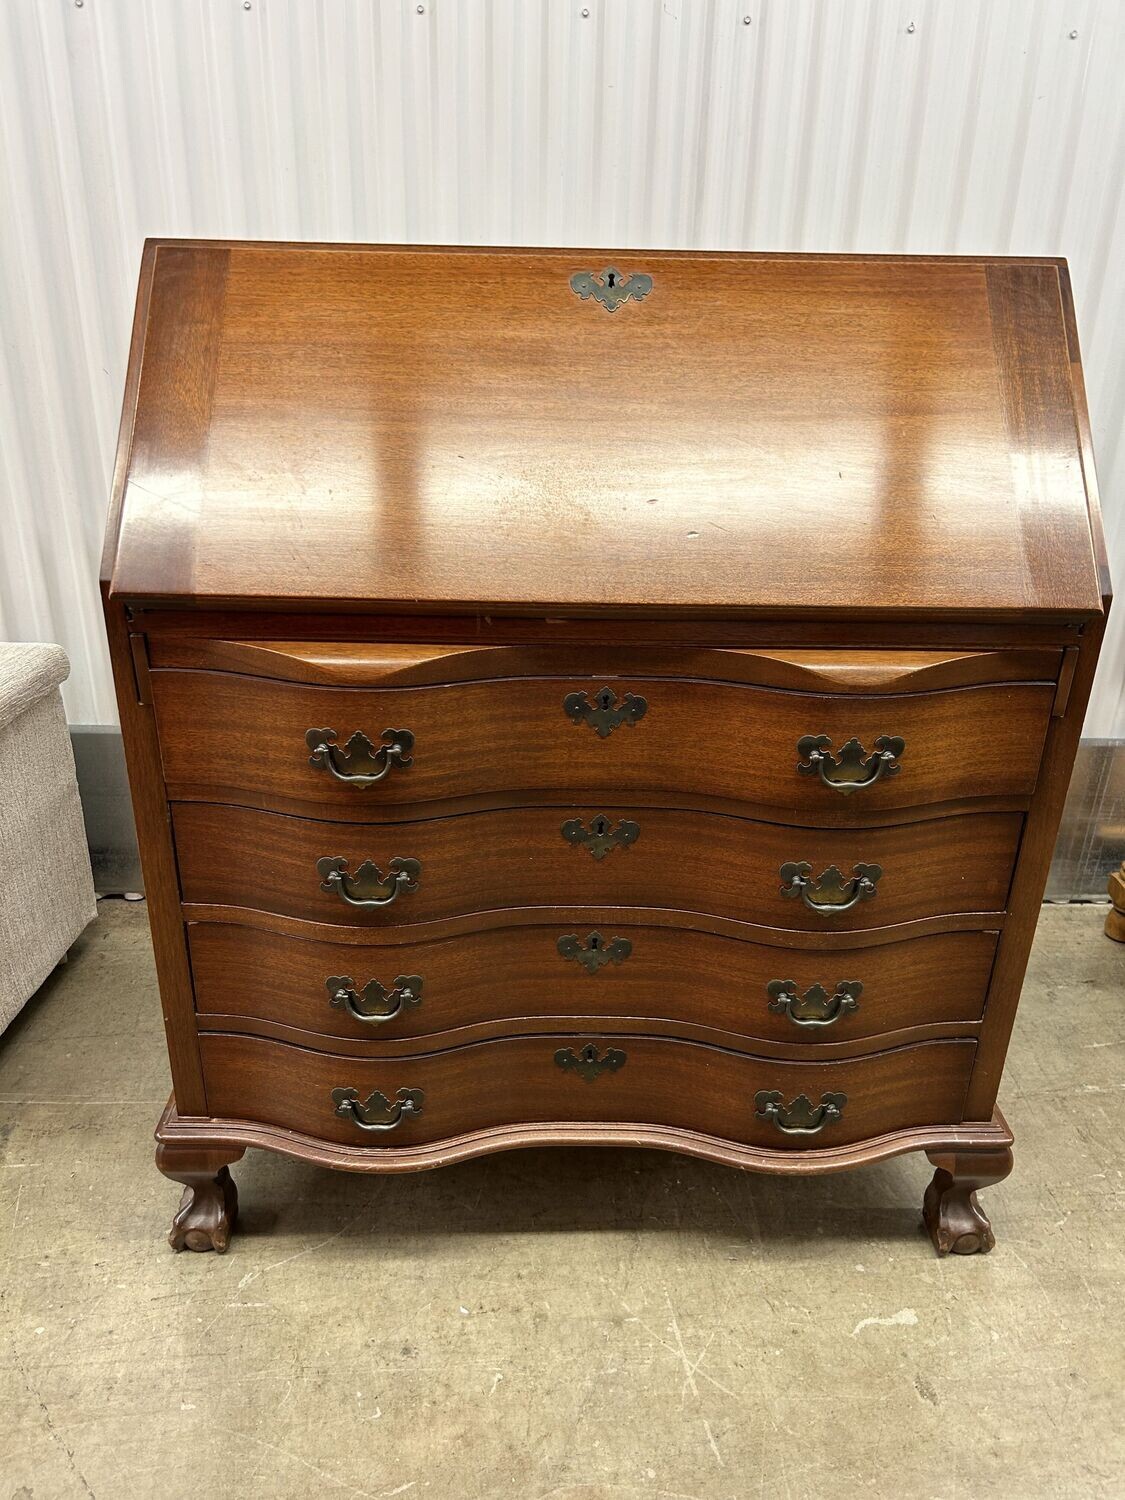 Vintage Mahogany Secretary Desk, with key! #2118 ** 3 days to sell, full price